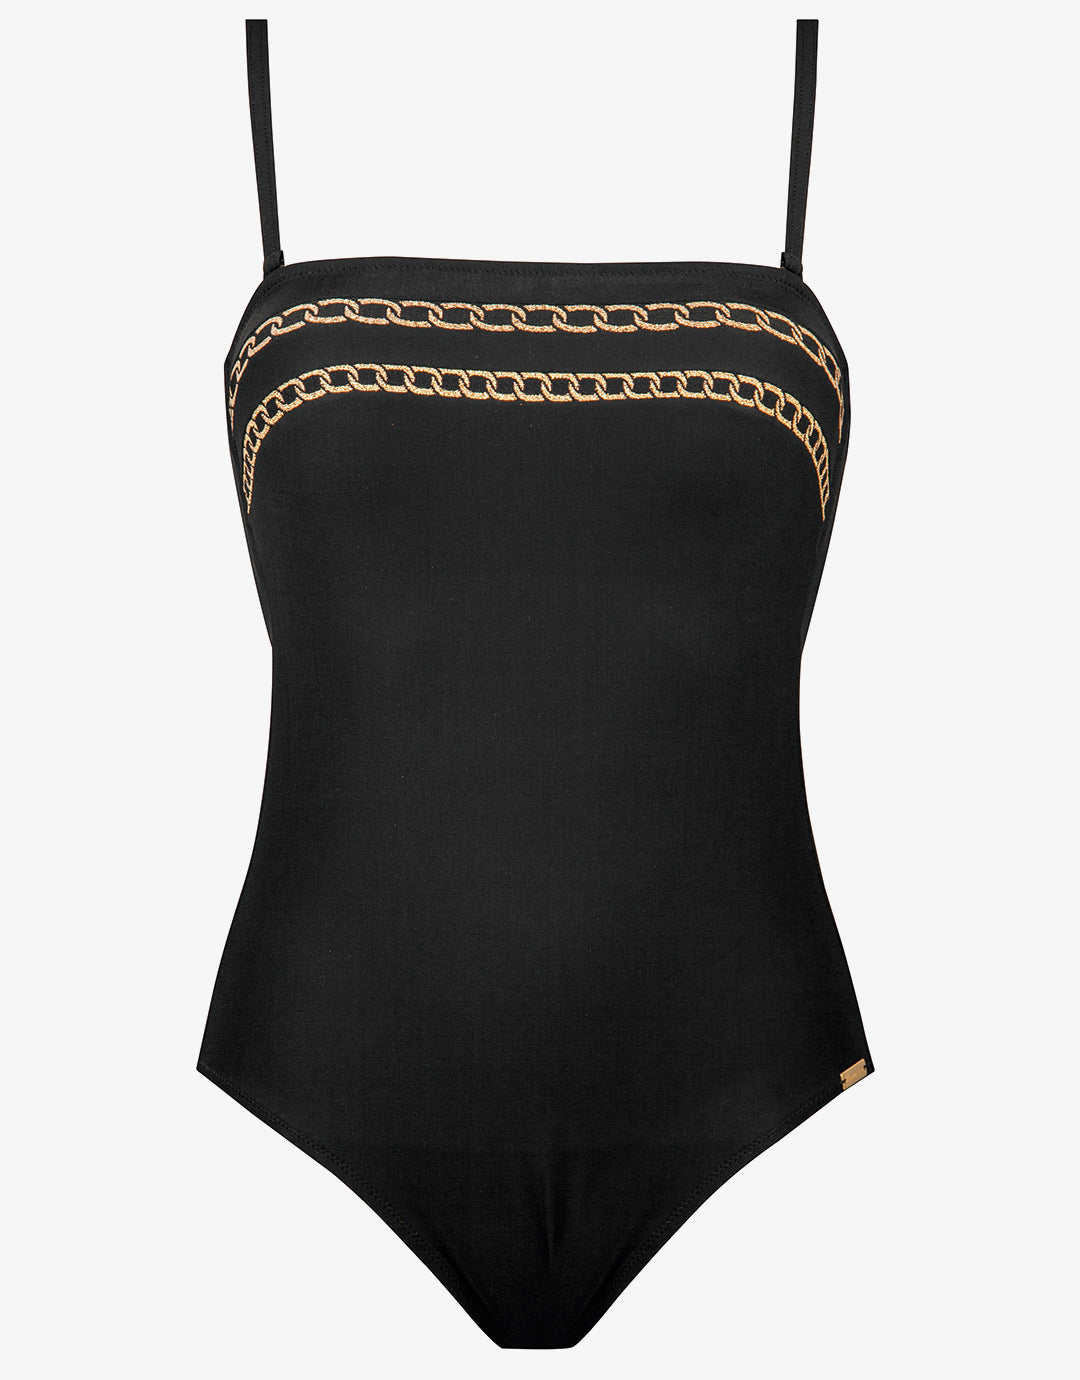 Golden Chain Bandeau Swimsuit - Black - Simply Beach UK